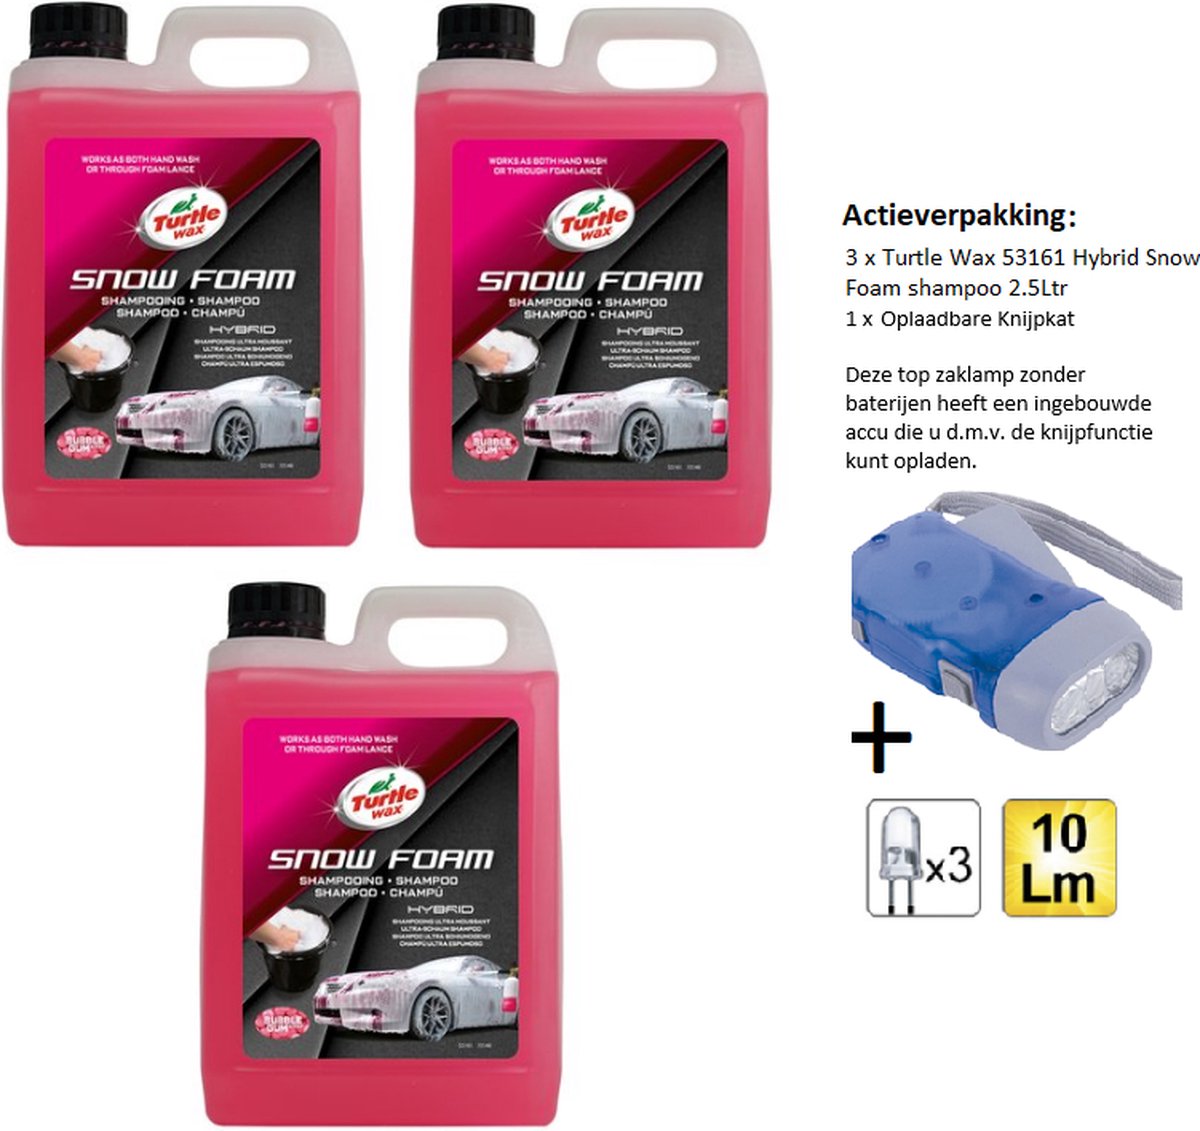 Turtle Wax 53161 Hybrid Snow Foam shampoo - 2.5 Liter - 3 Stuks + Zaklamp/Knijpkat